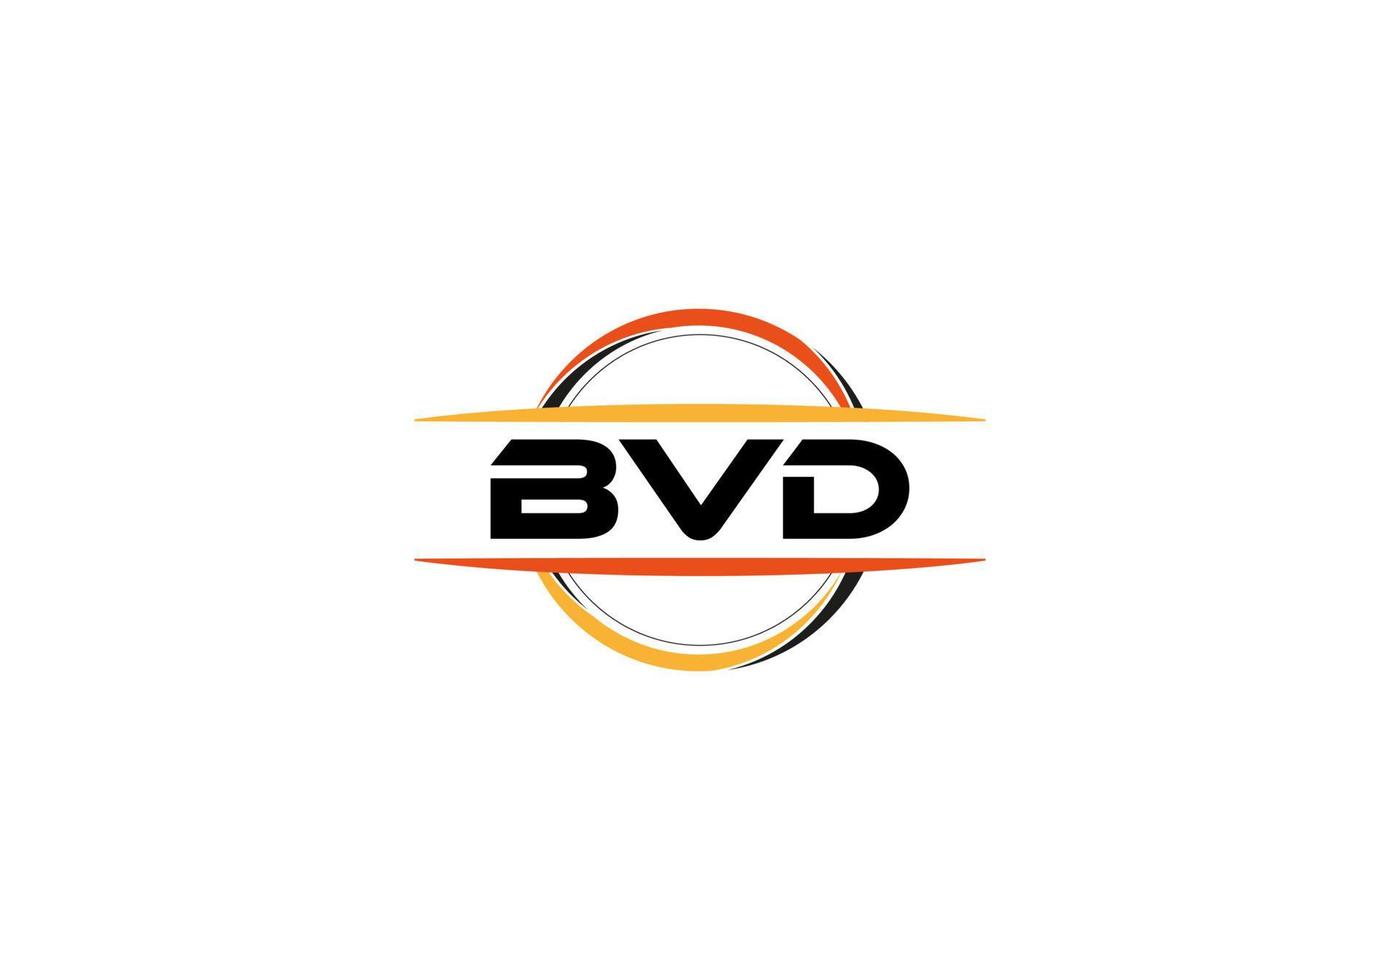 BVD letter royalty mandala shape logo. BVD brush art logo. BVD logo for a company, business, and commercial use. vector